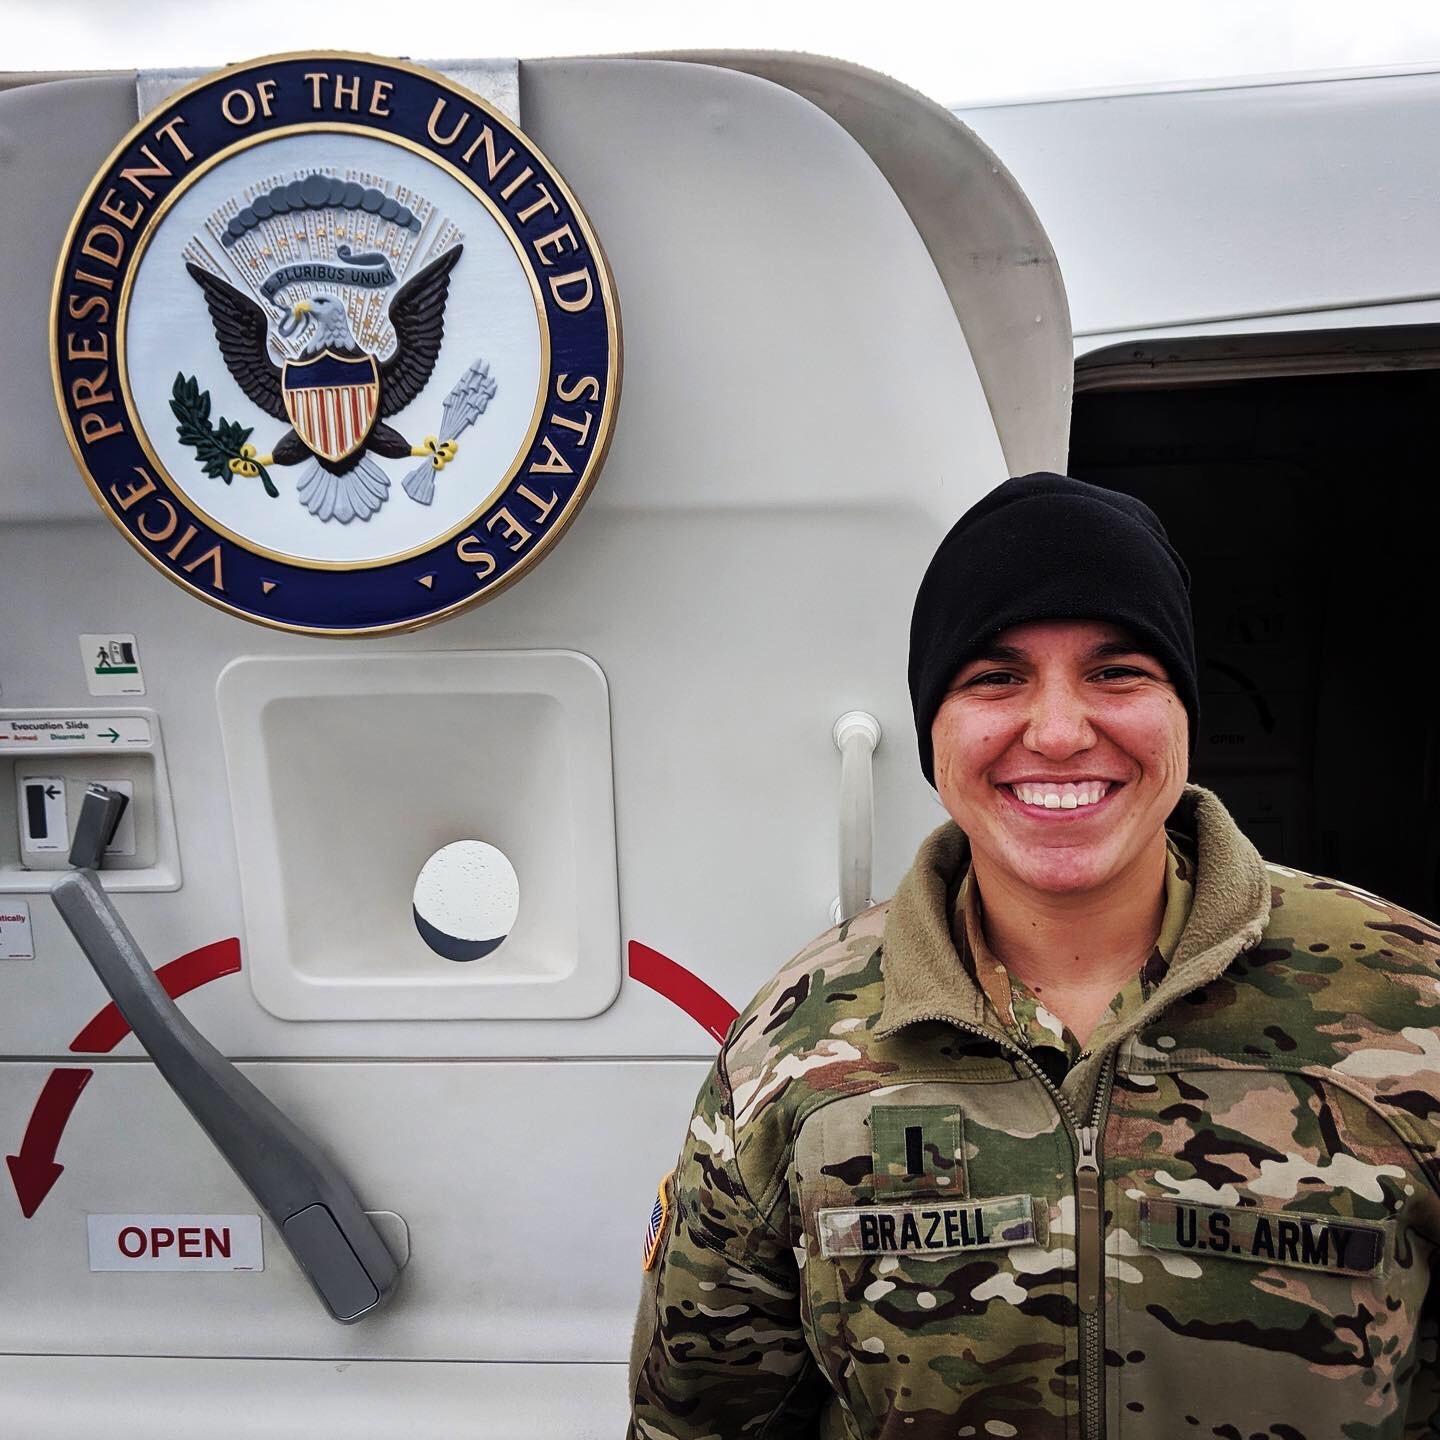 2020 US Army Women's Foundation 2020 Scholarship Recipient Taler Brazell